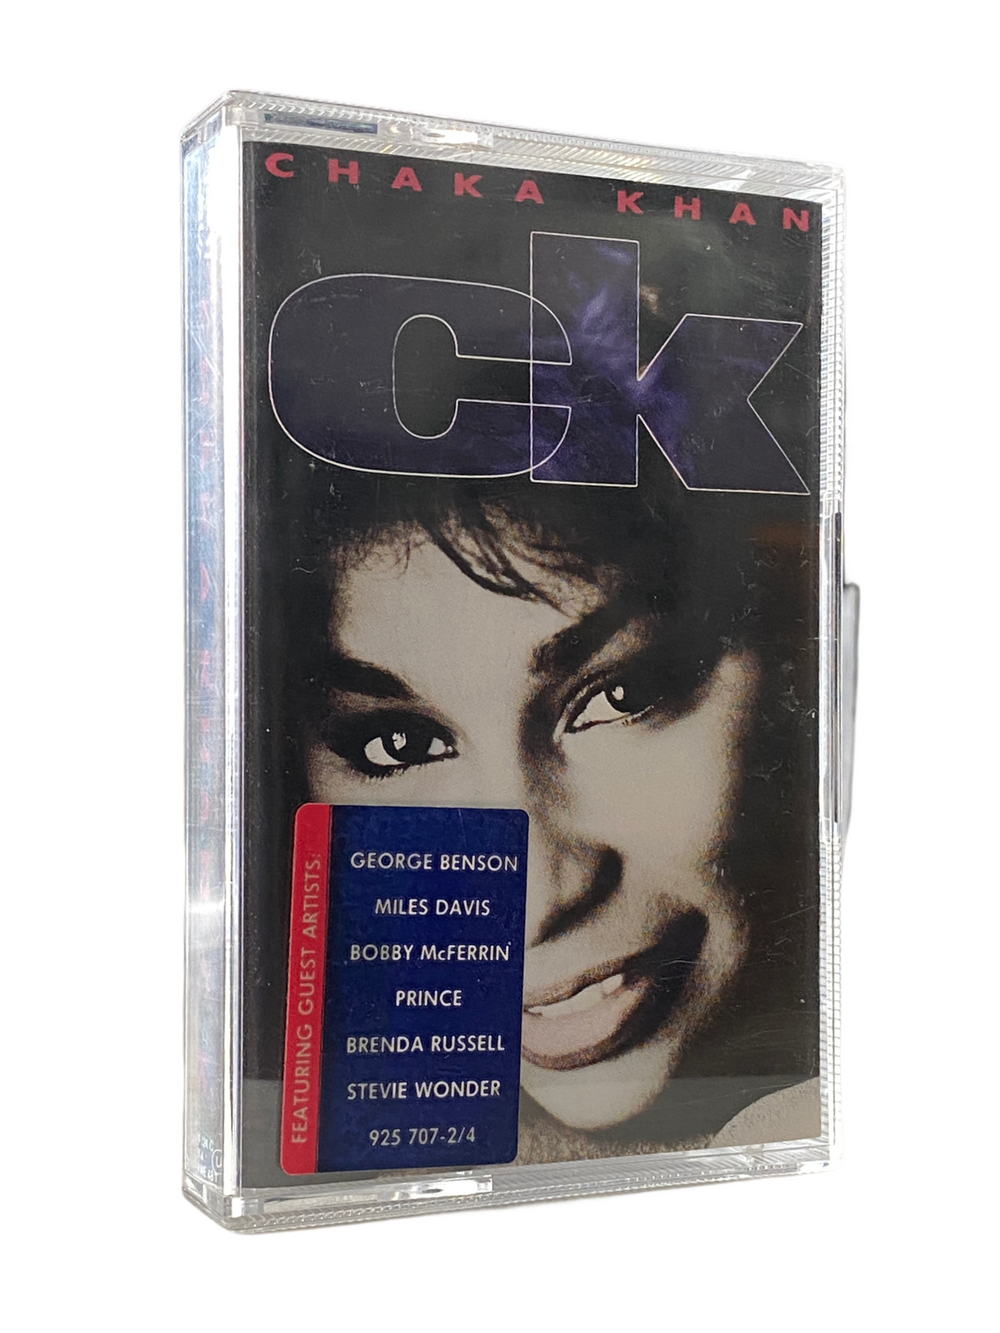 Chaka Khan C.K. Original Cassette Tape UK EU 1988 Release Prince